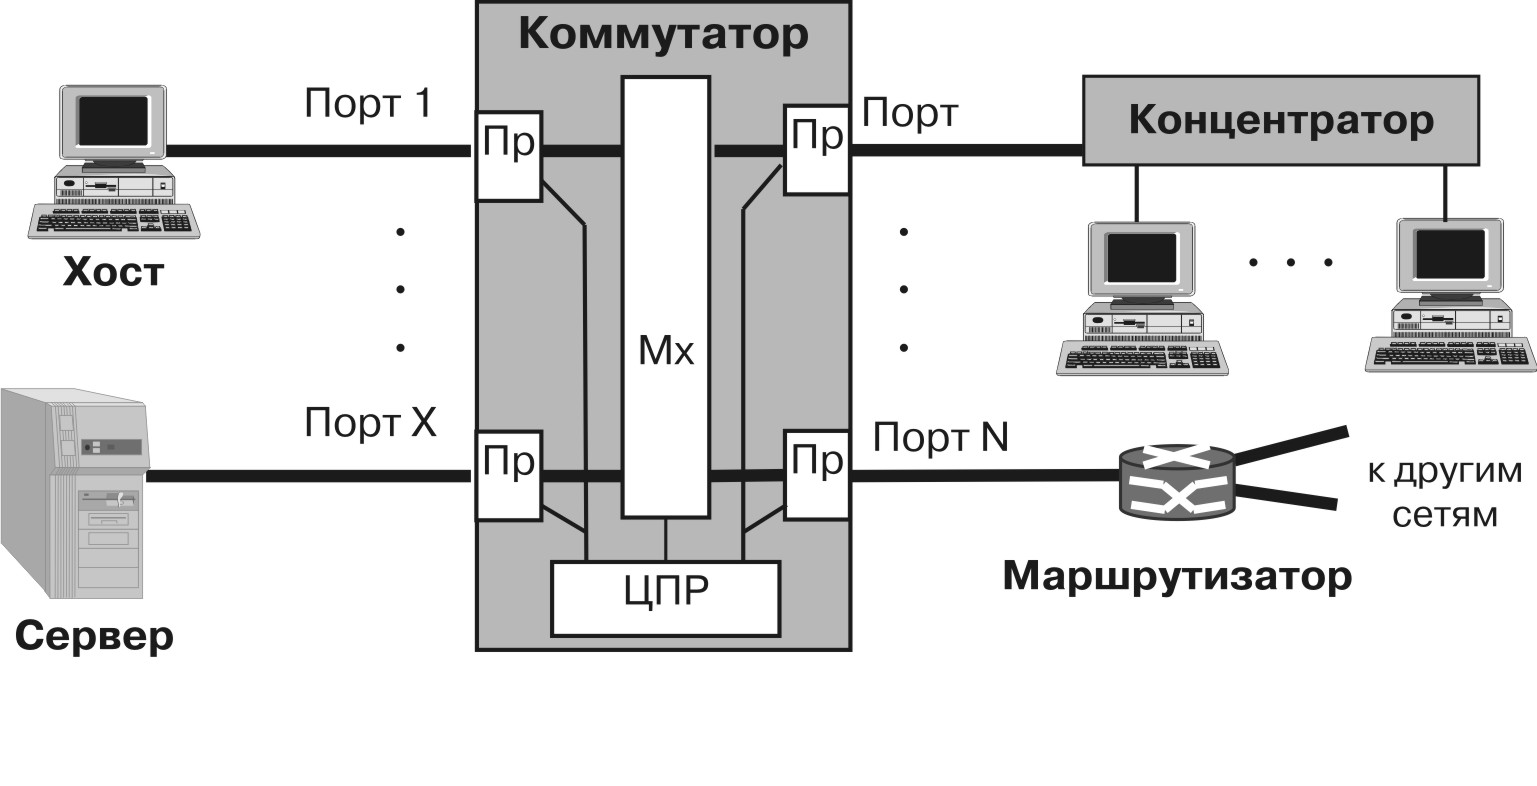 Структура сети с коммутатором, концентратором и маршрутизатором